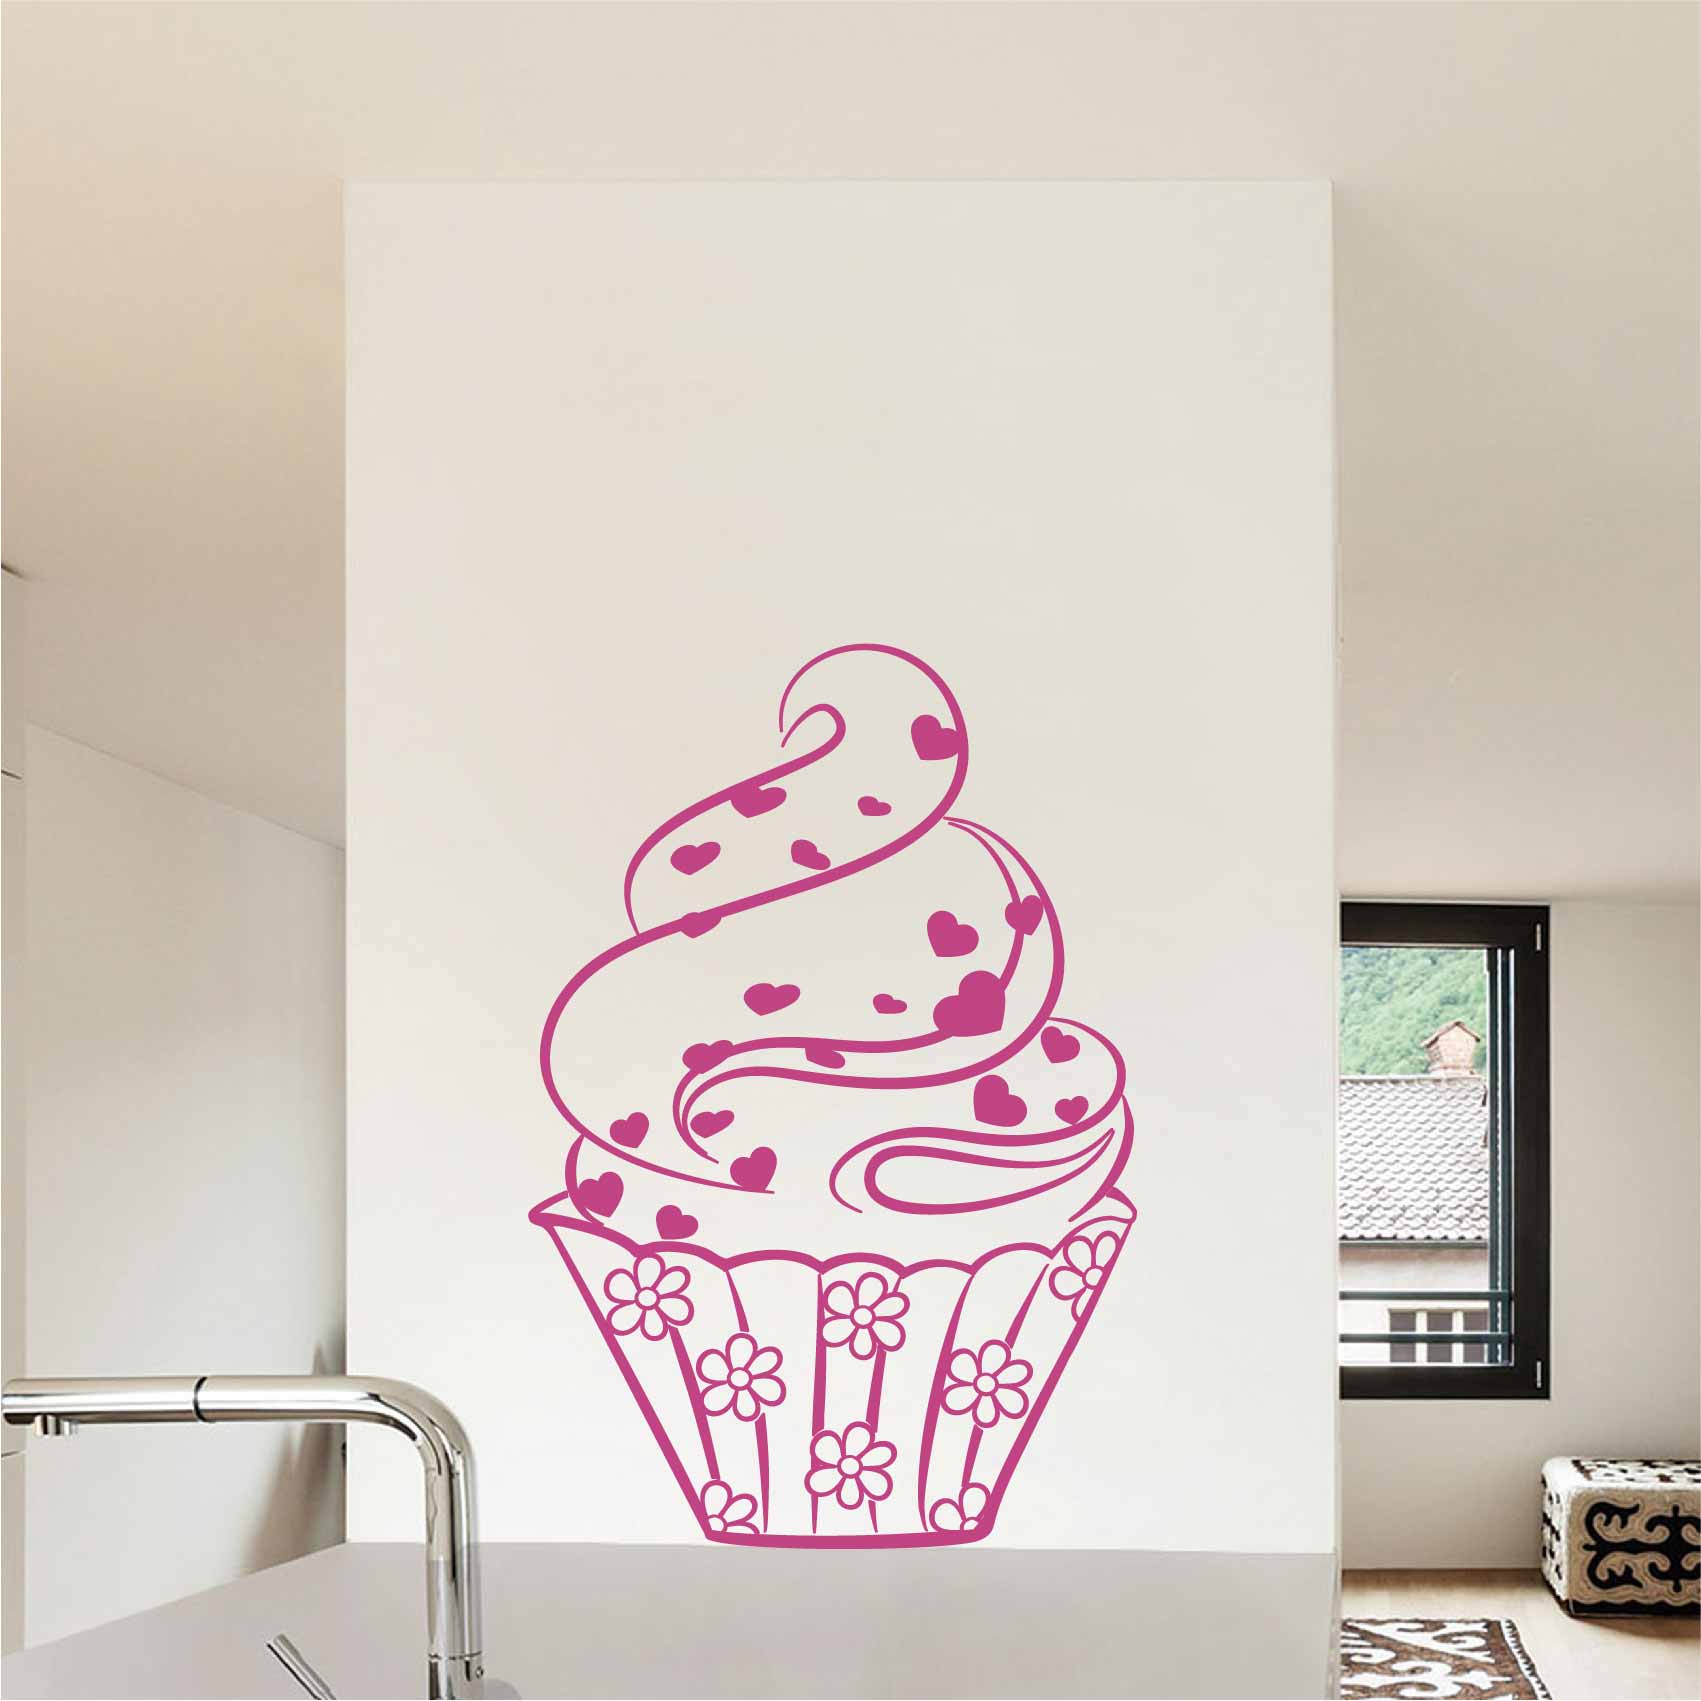 stickers-cupcake-coeur-ref9cupcake-autocollant-muraux-cuisine-salle-a-manger-salon-sticker-mural-deco-gateau-cupcakes-gateaux